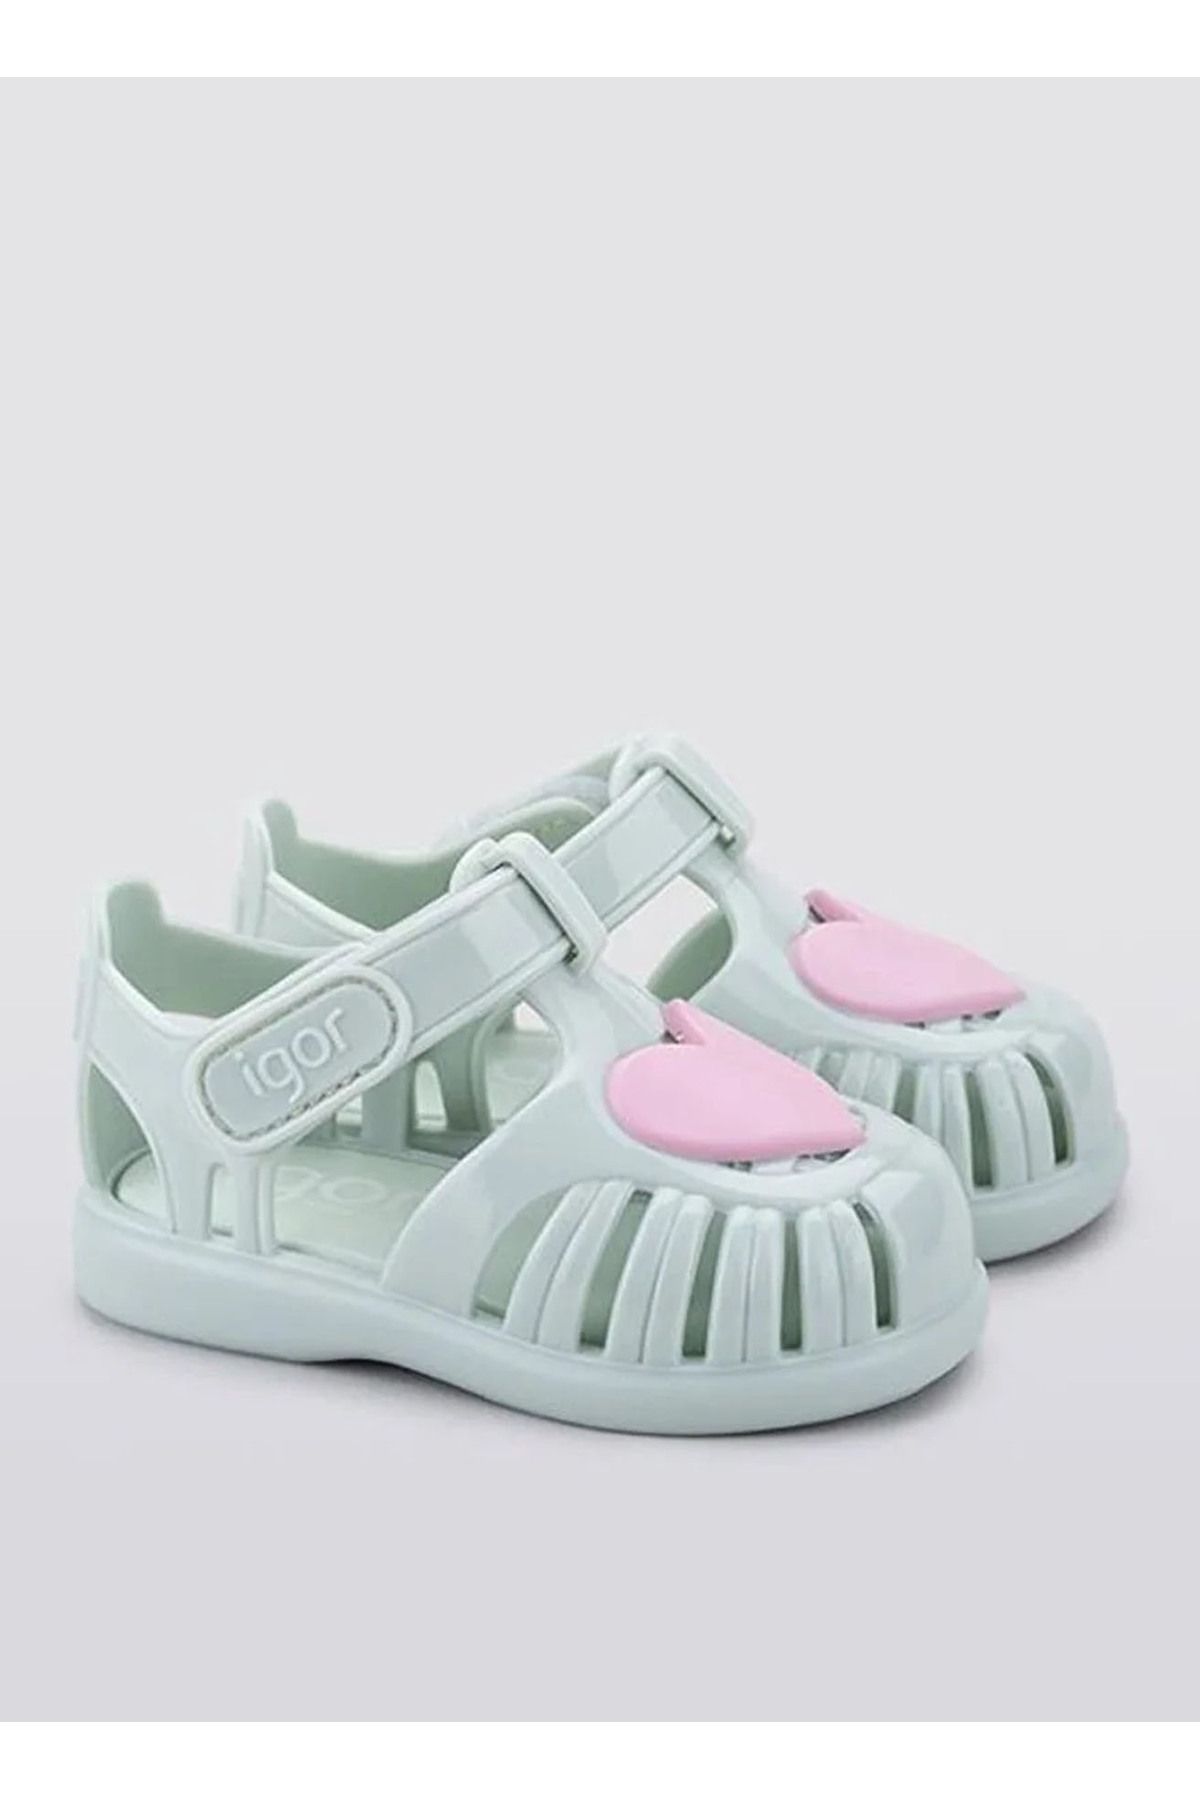 IGOR Mint Baby Sandale S10310 Tobby Gloss Love